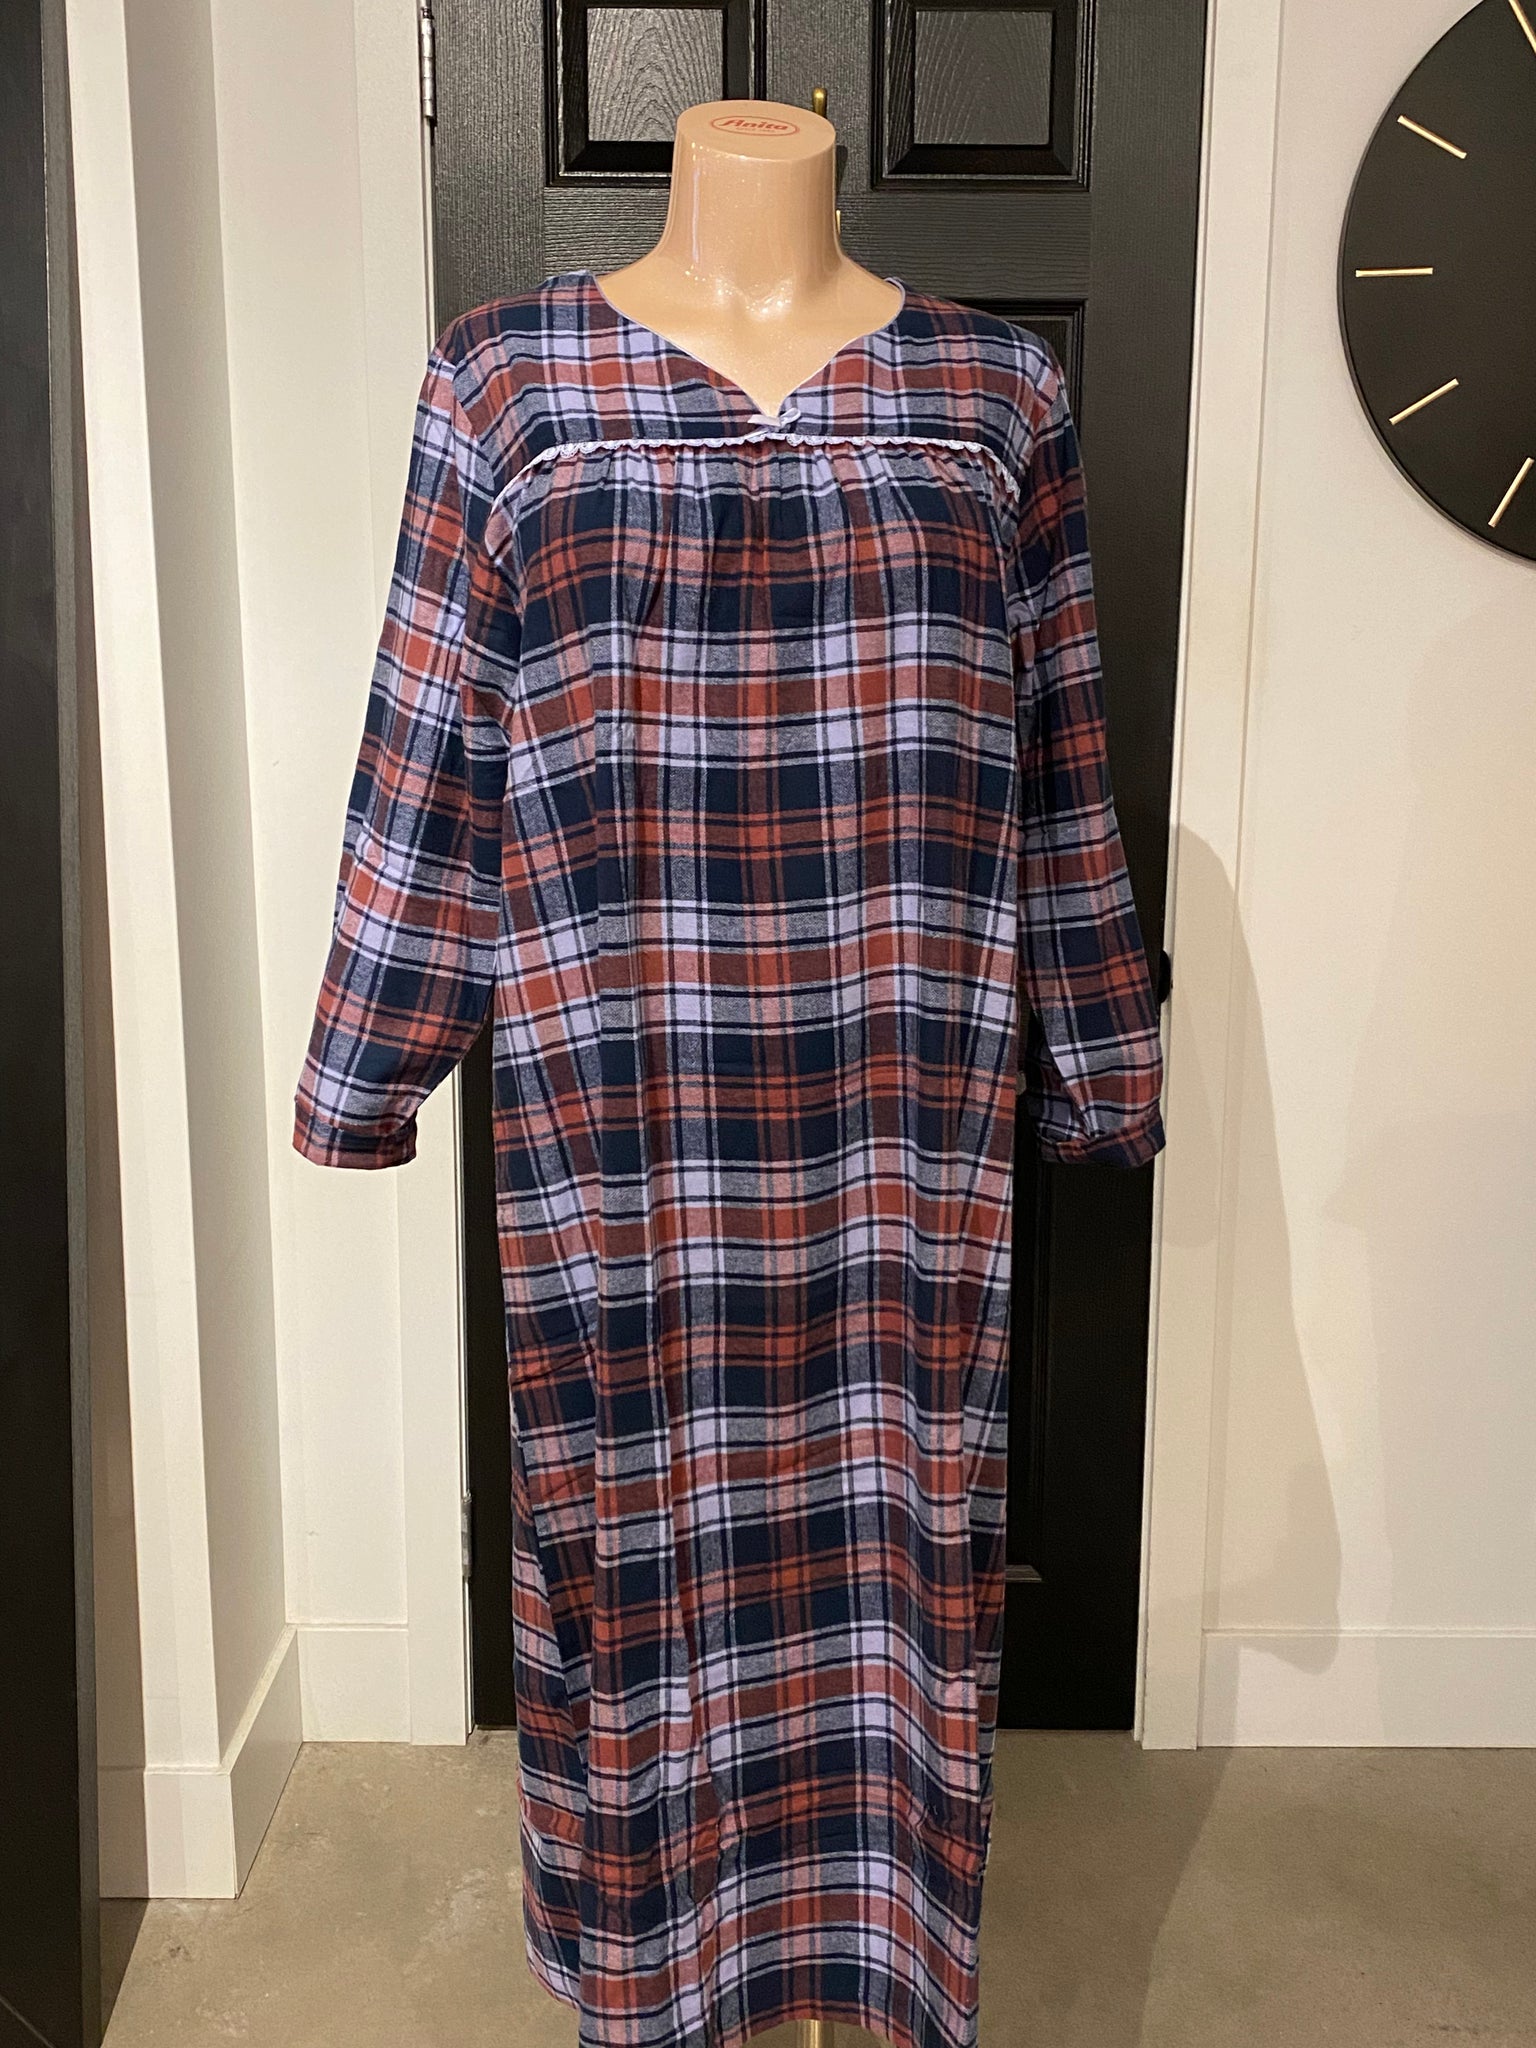 KayAnna Flannel Night Gown- F11435- 100%cotton